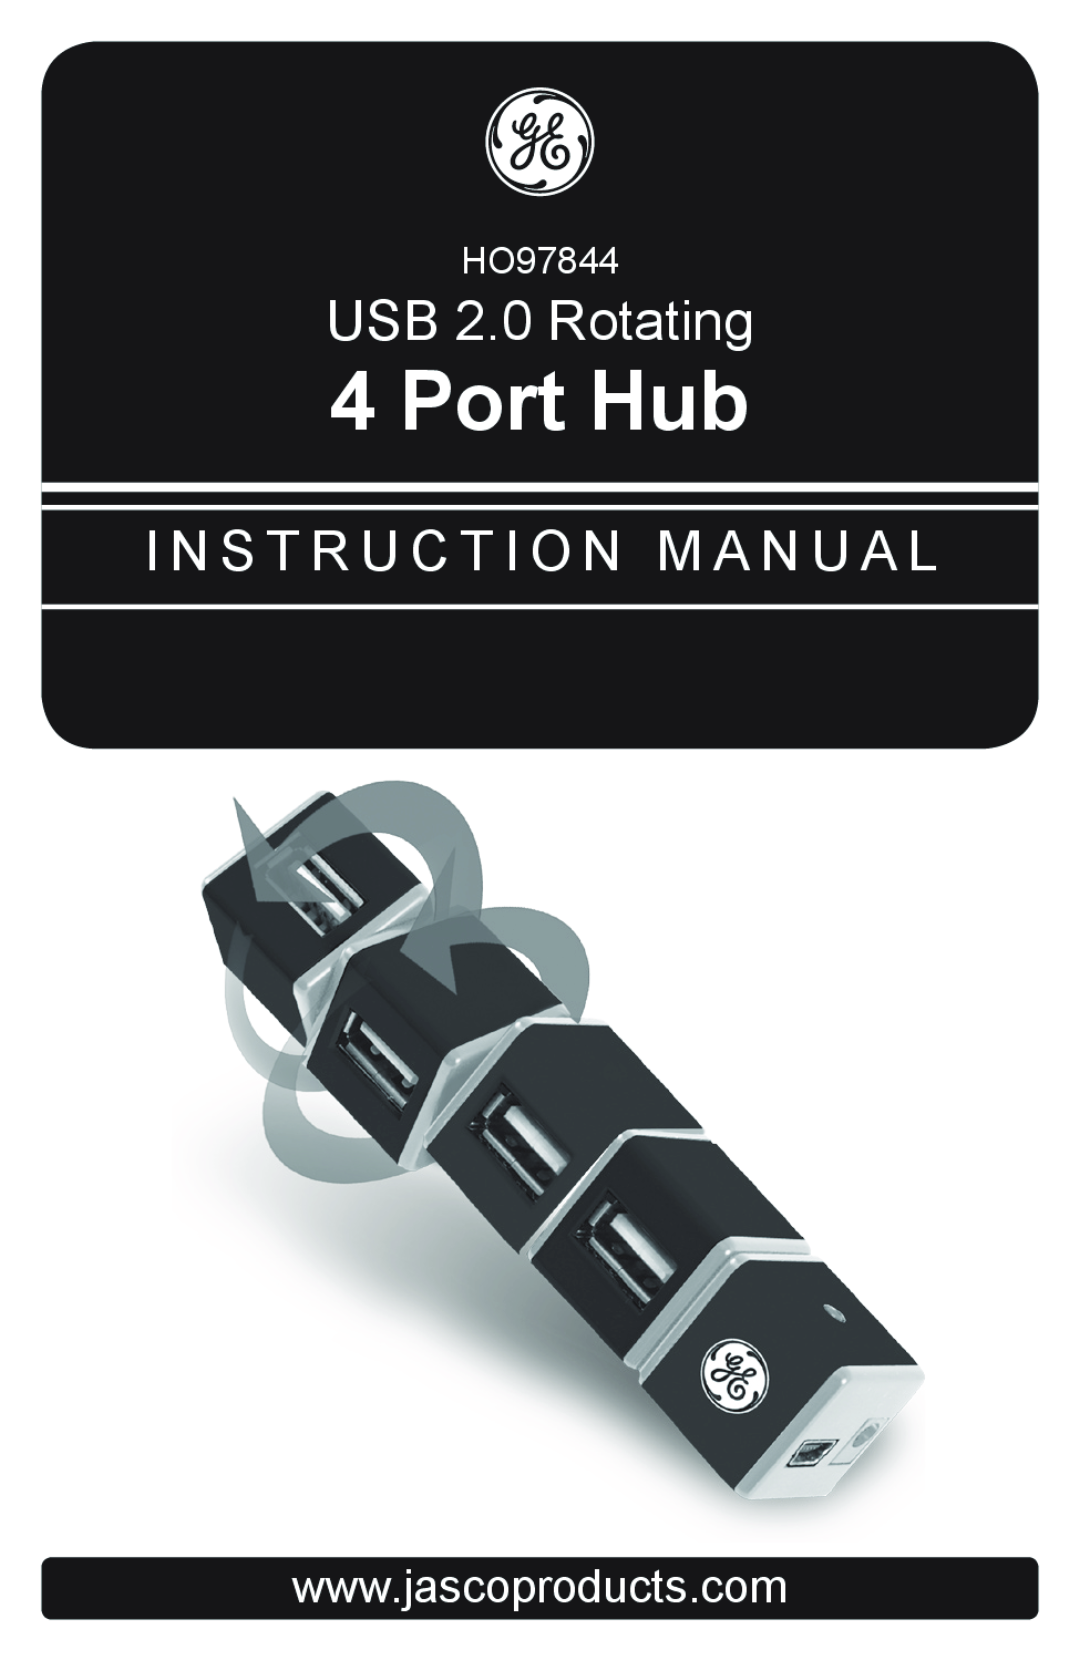 Jasco HO97844 instruction manual Port Hub, USB 2.0 Rotating, I N S T R U C T I O N M A N U A L 